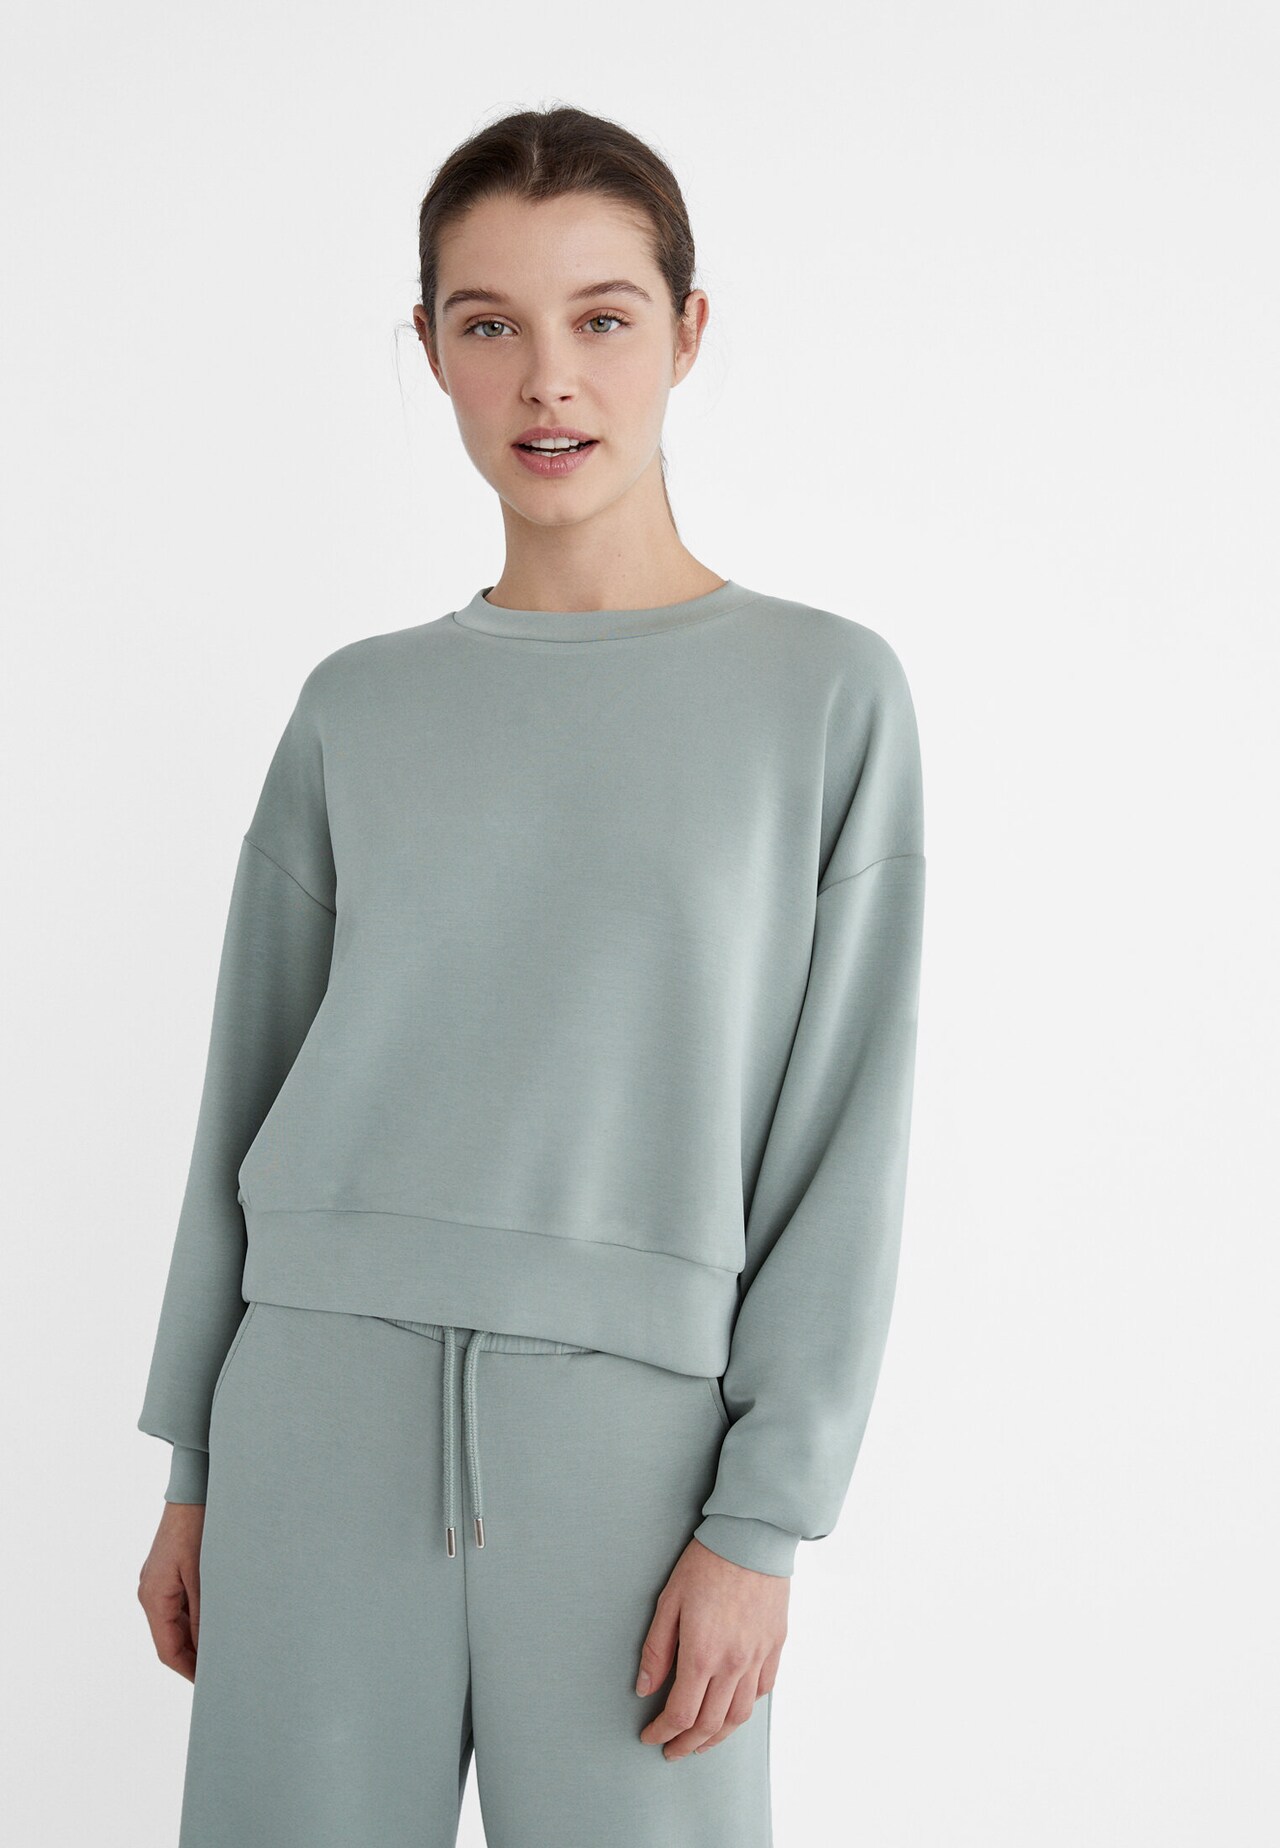 Soft-touch modal sweatshirt - Women's fashion